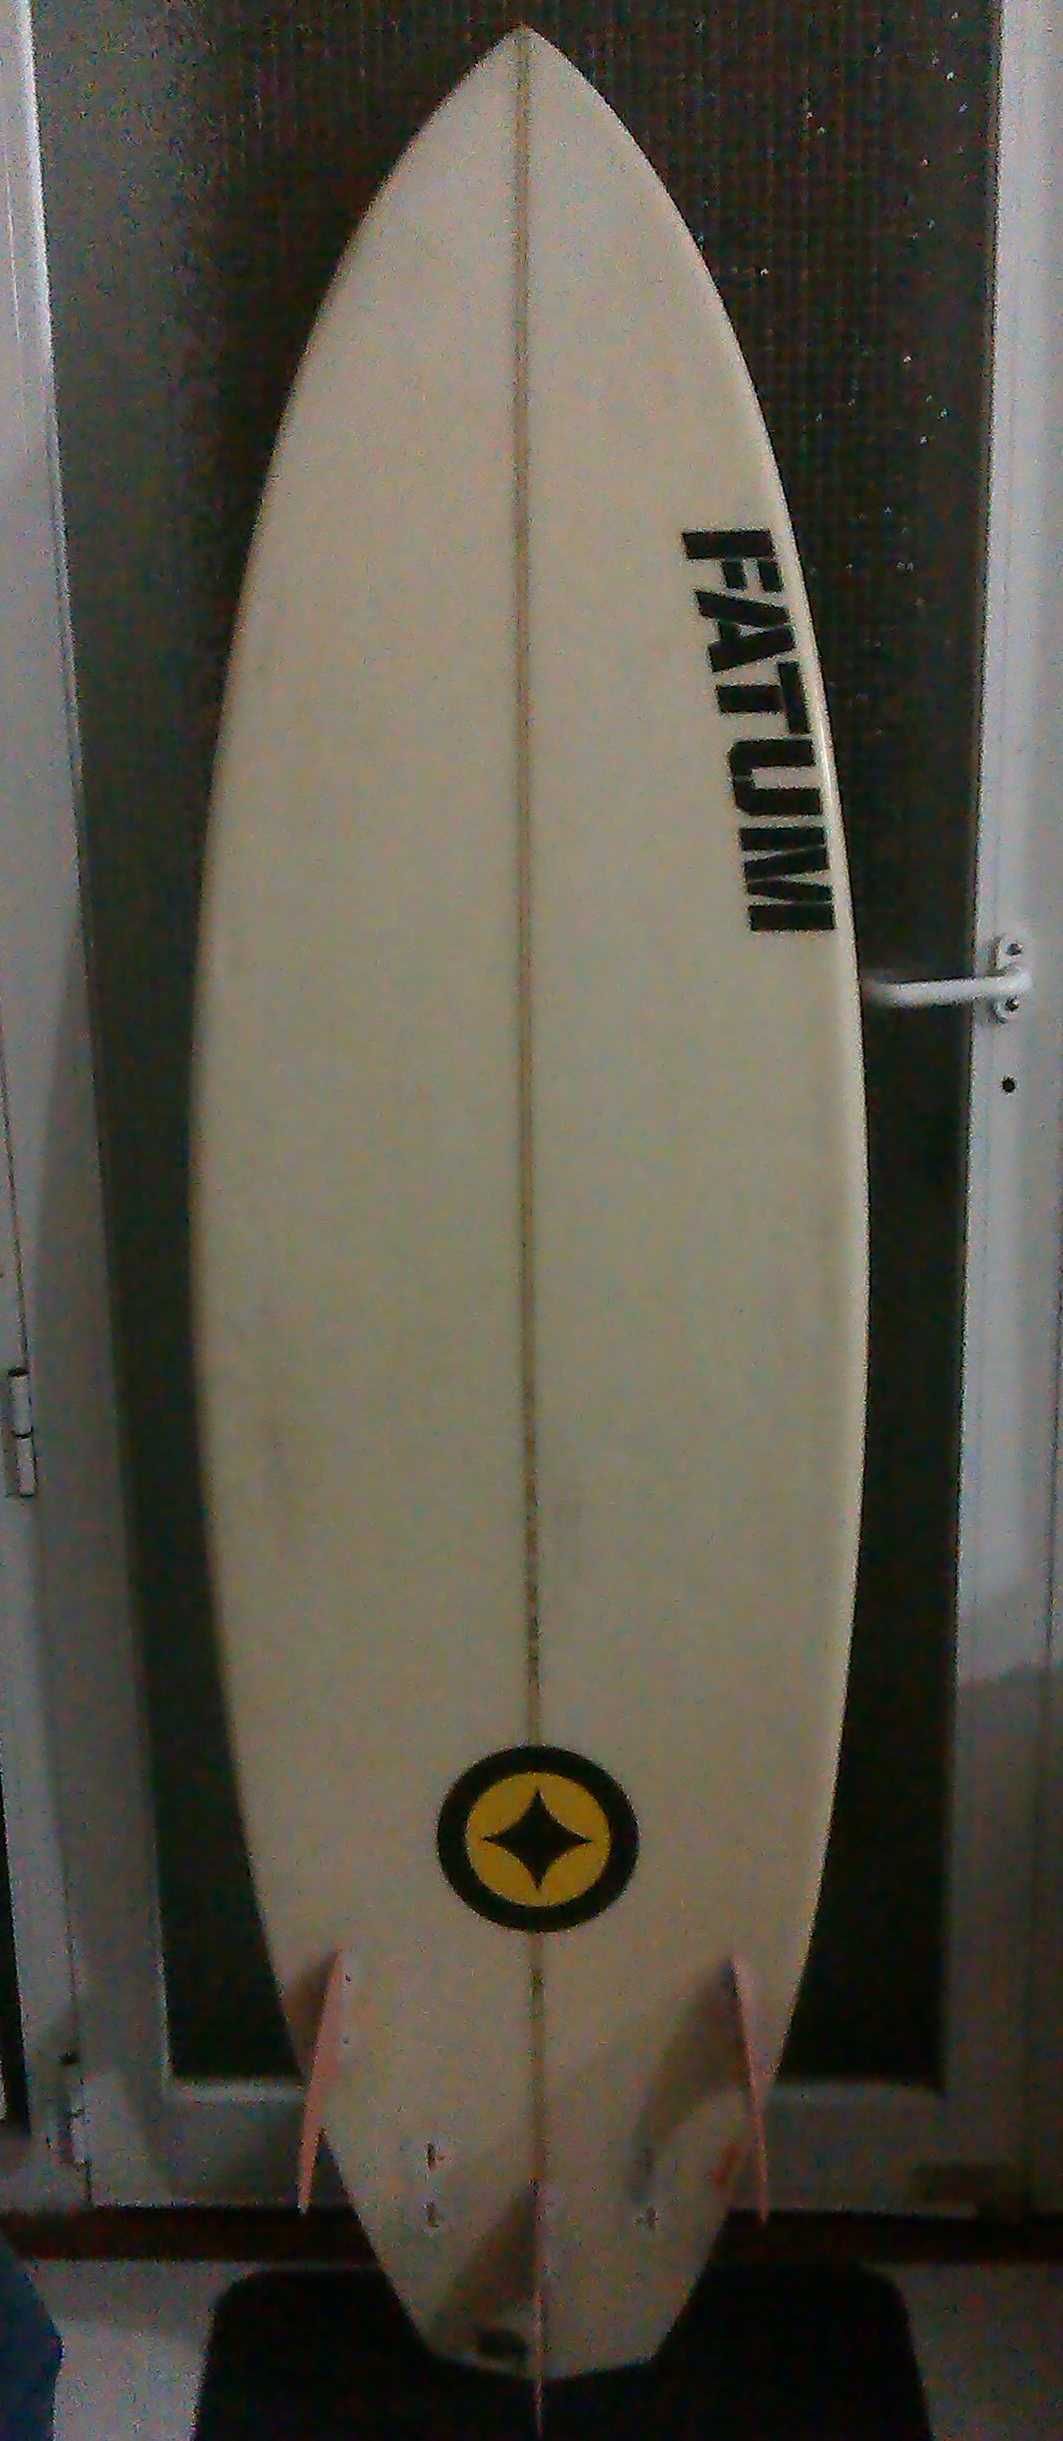 Surfboard Fatum 5´10 (aprox. 30L) com quilhas. Bom estado (7/10)